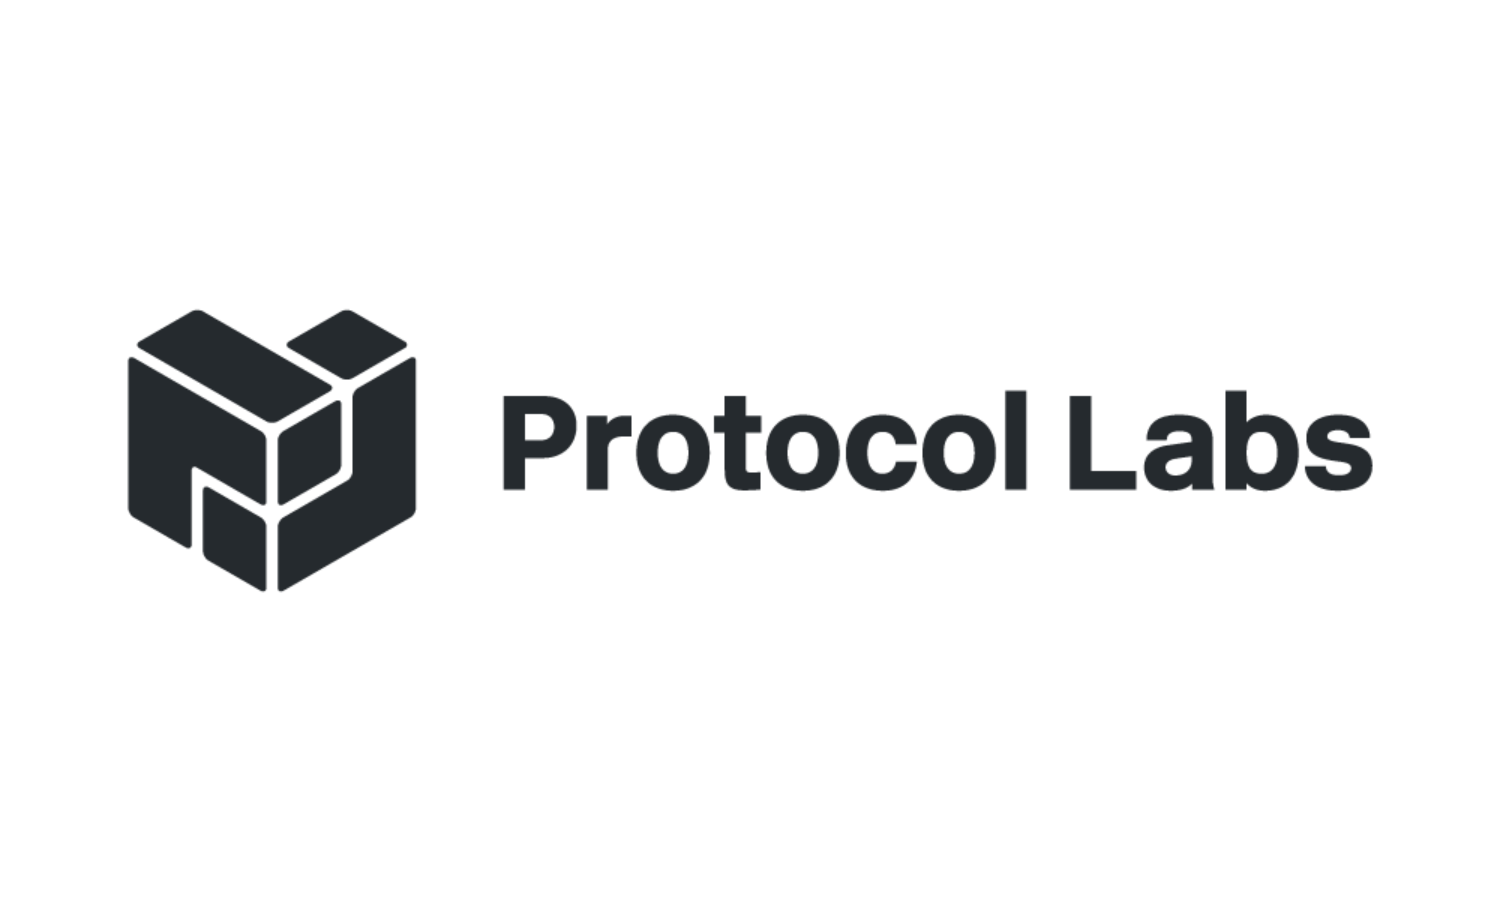 Protocol Labs is hiring on Meet.jobs!